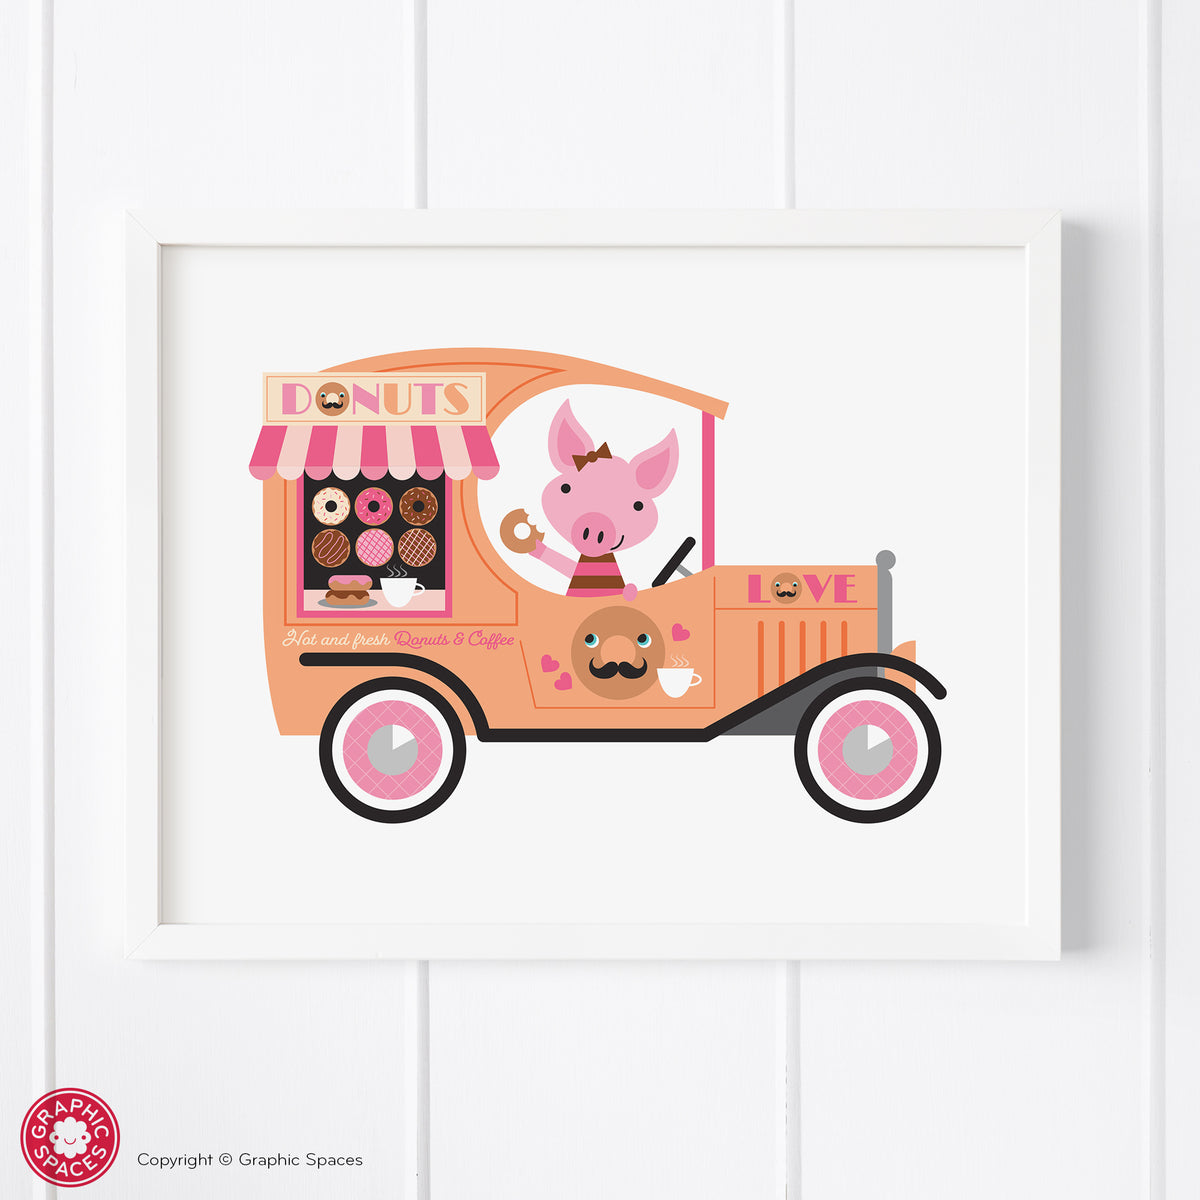 Donut truck nursery art print.